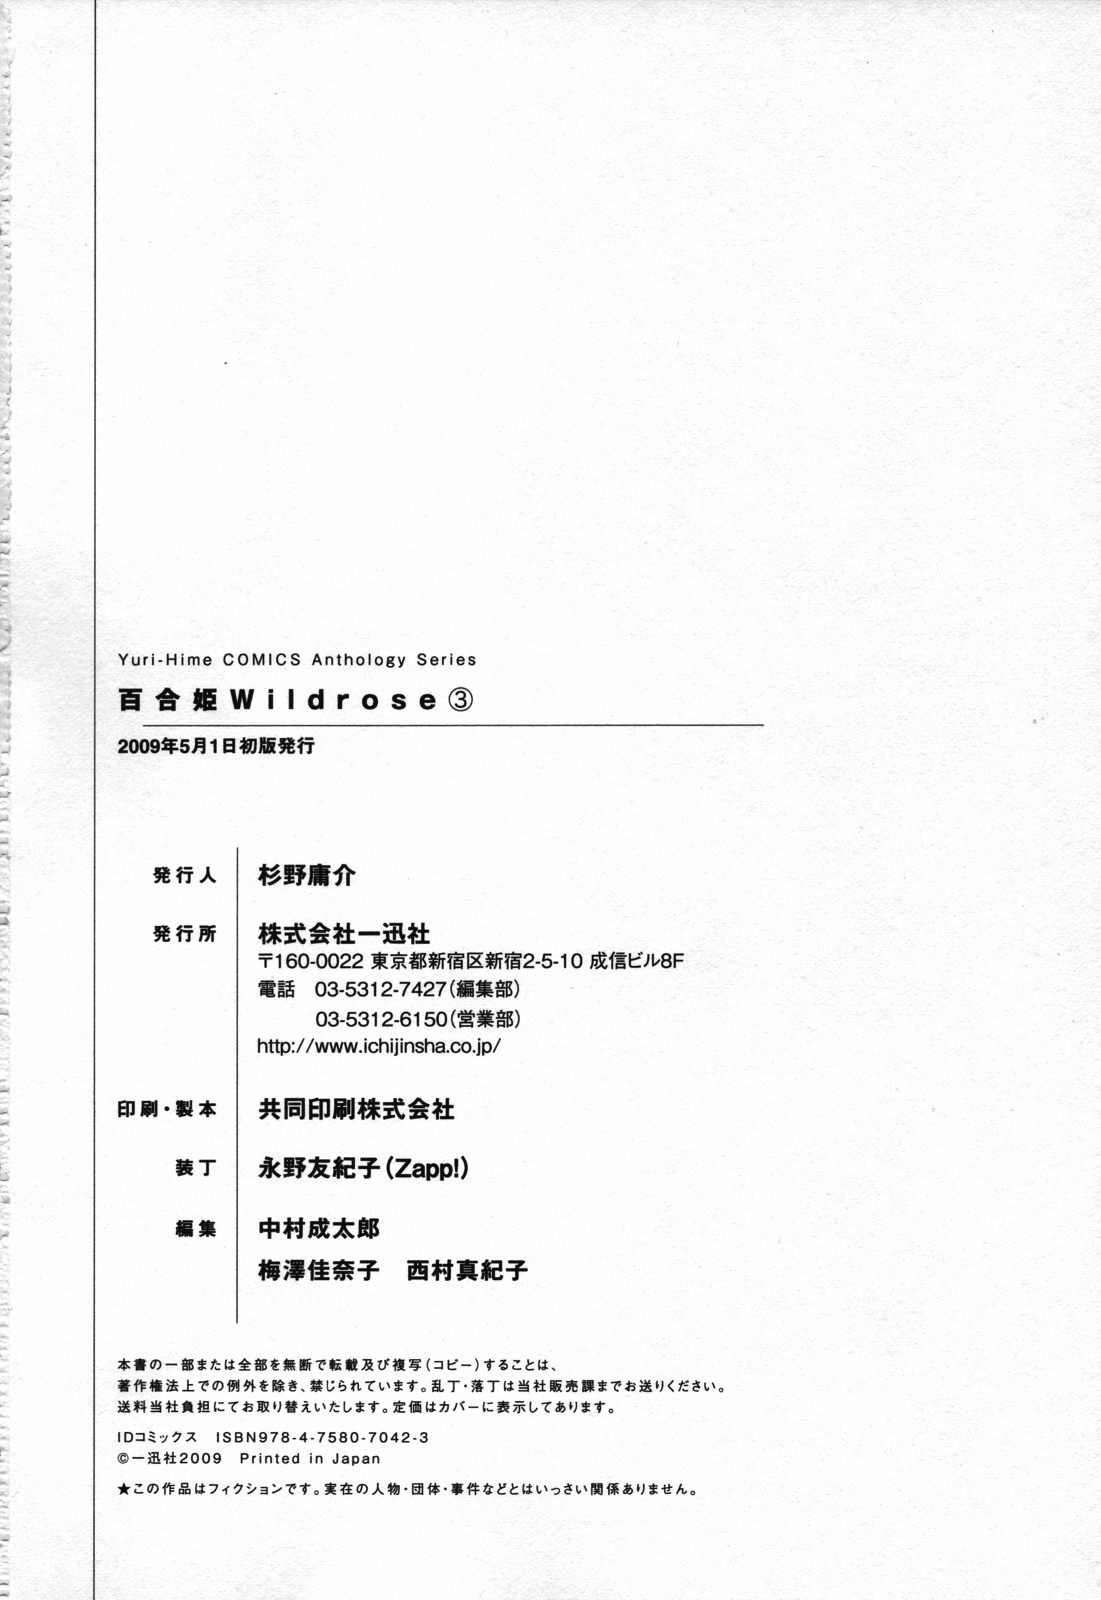 [Anthology] Yuri Hime Wildrose Vol. 3 159